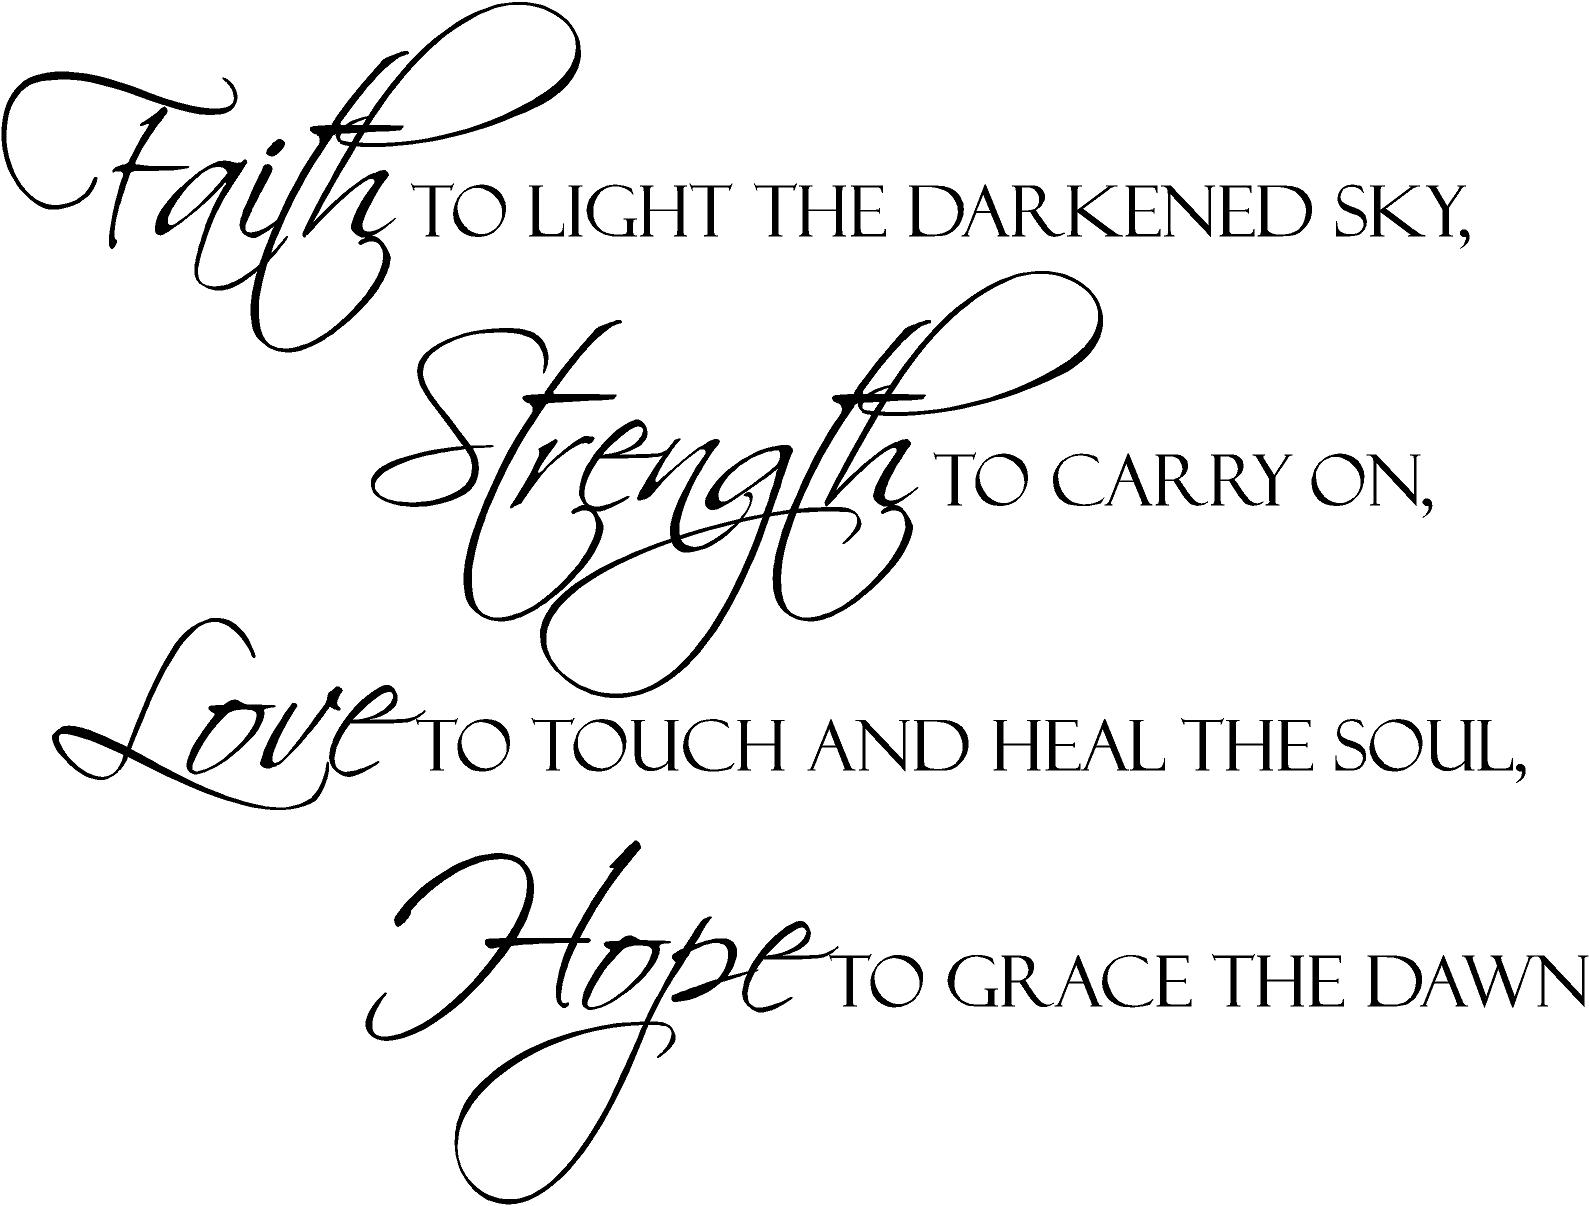 Inspirational Quotes Strength Faith Quotesgram